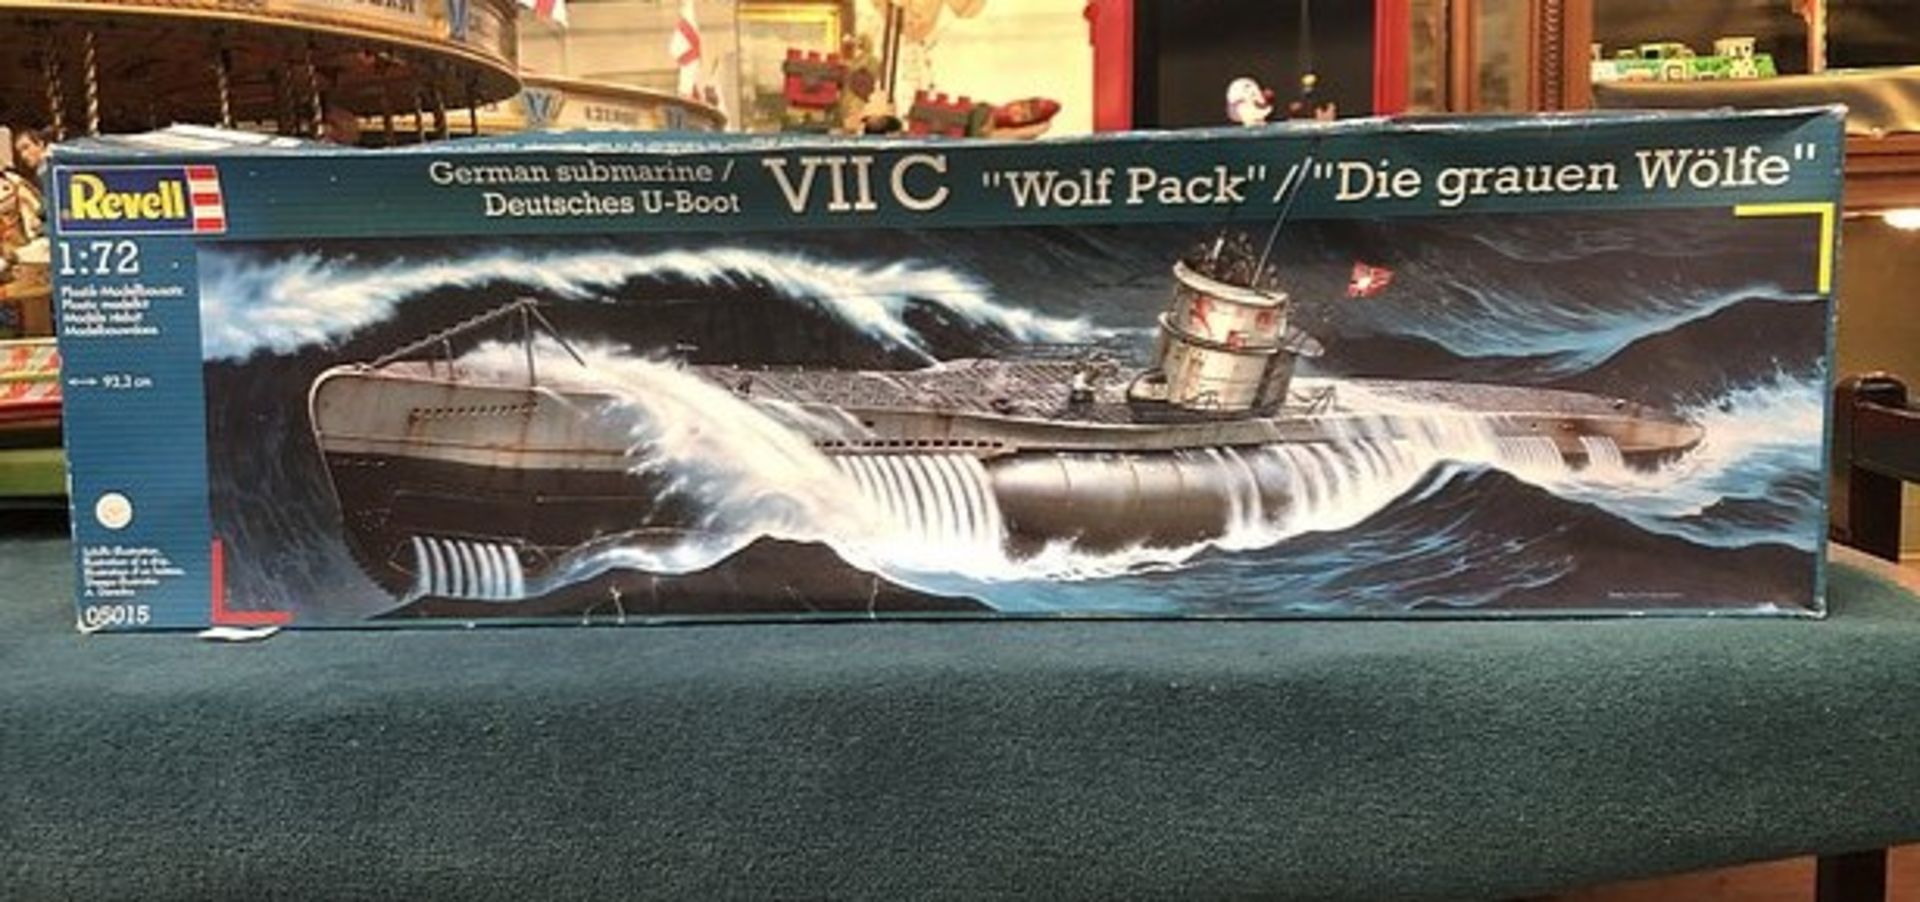 Revell German Submarine Vii C Wolfpack Scale 1/72 Plastic Model Kit Complete In Box